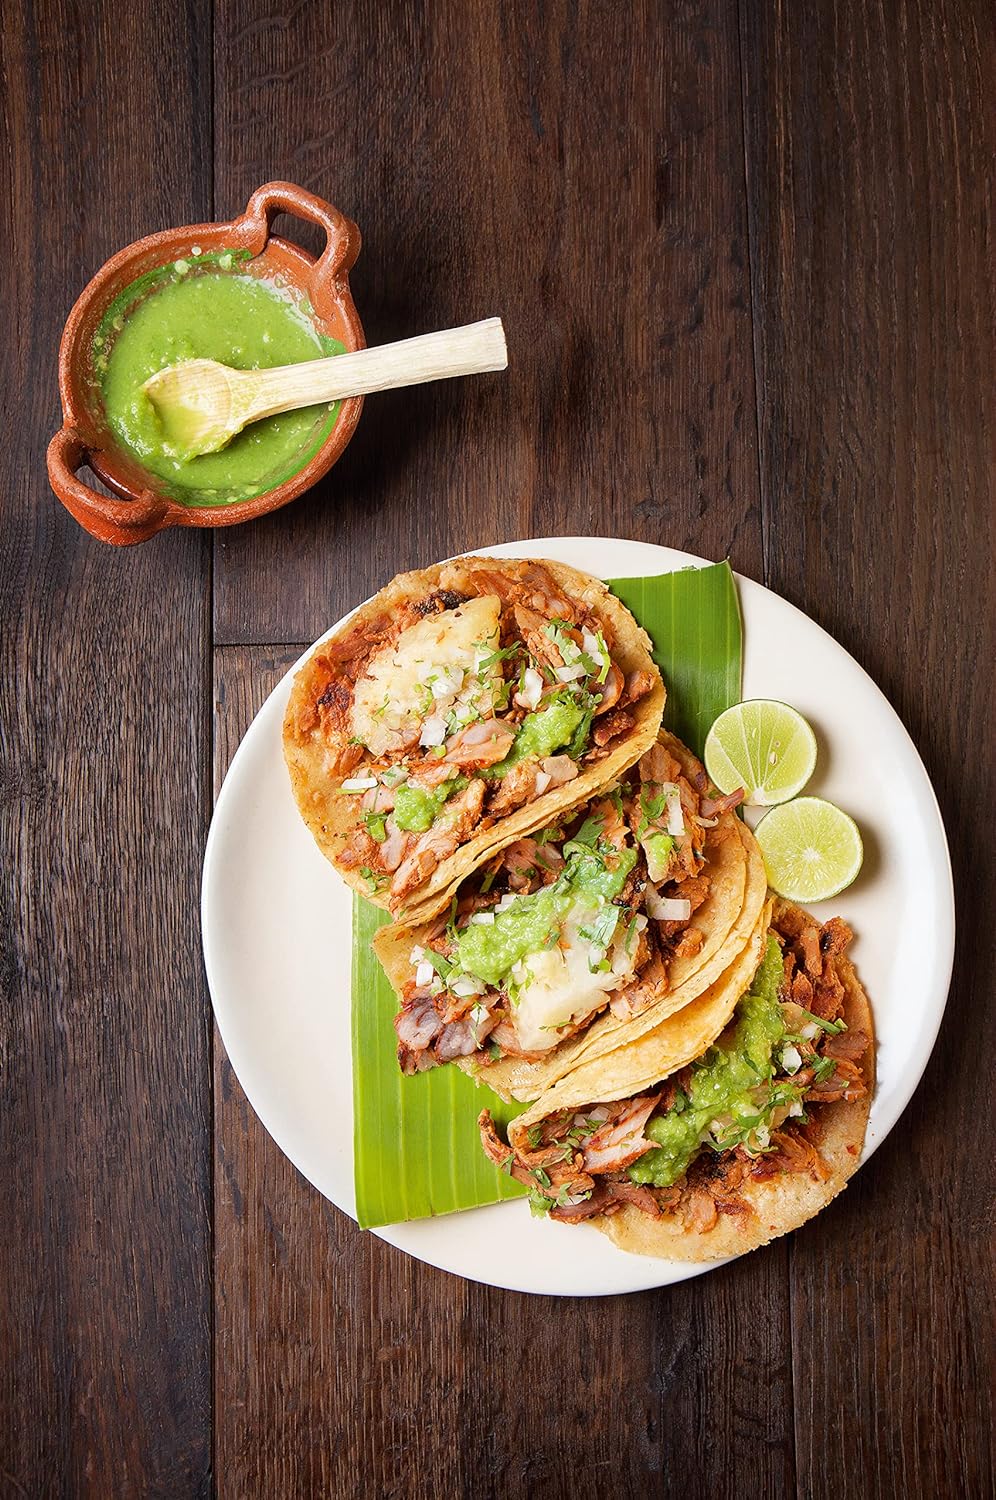 Mexico // The Cookbook